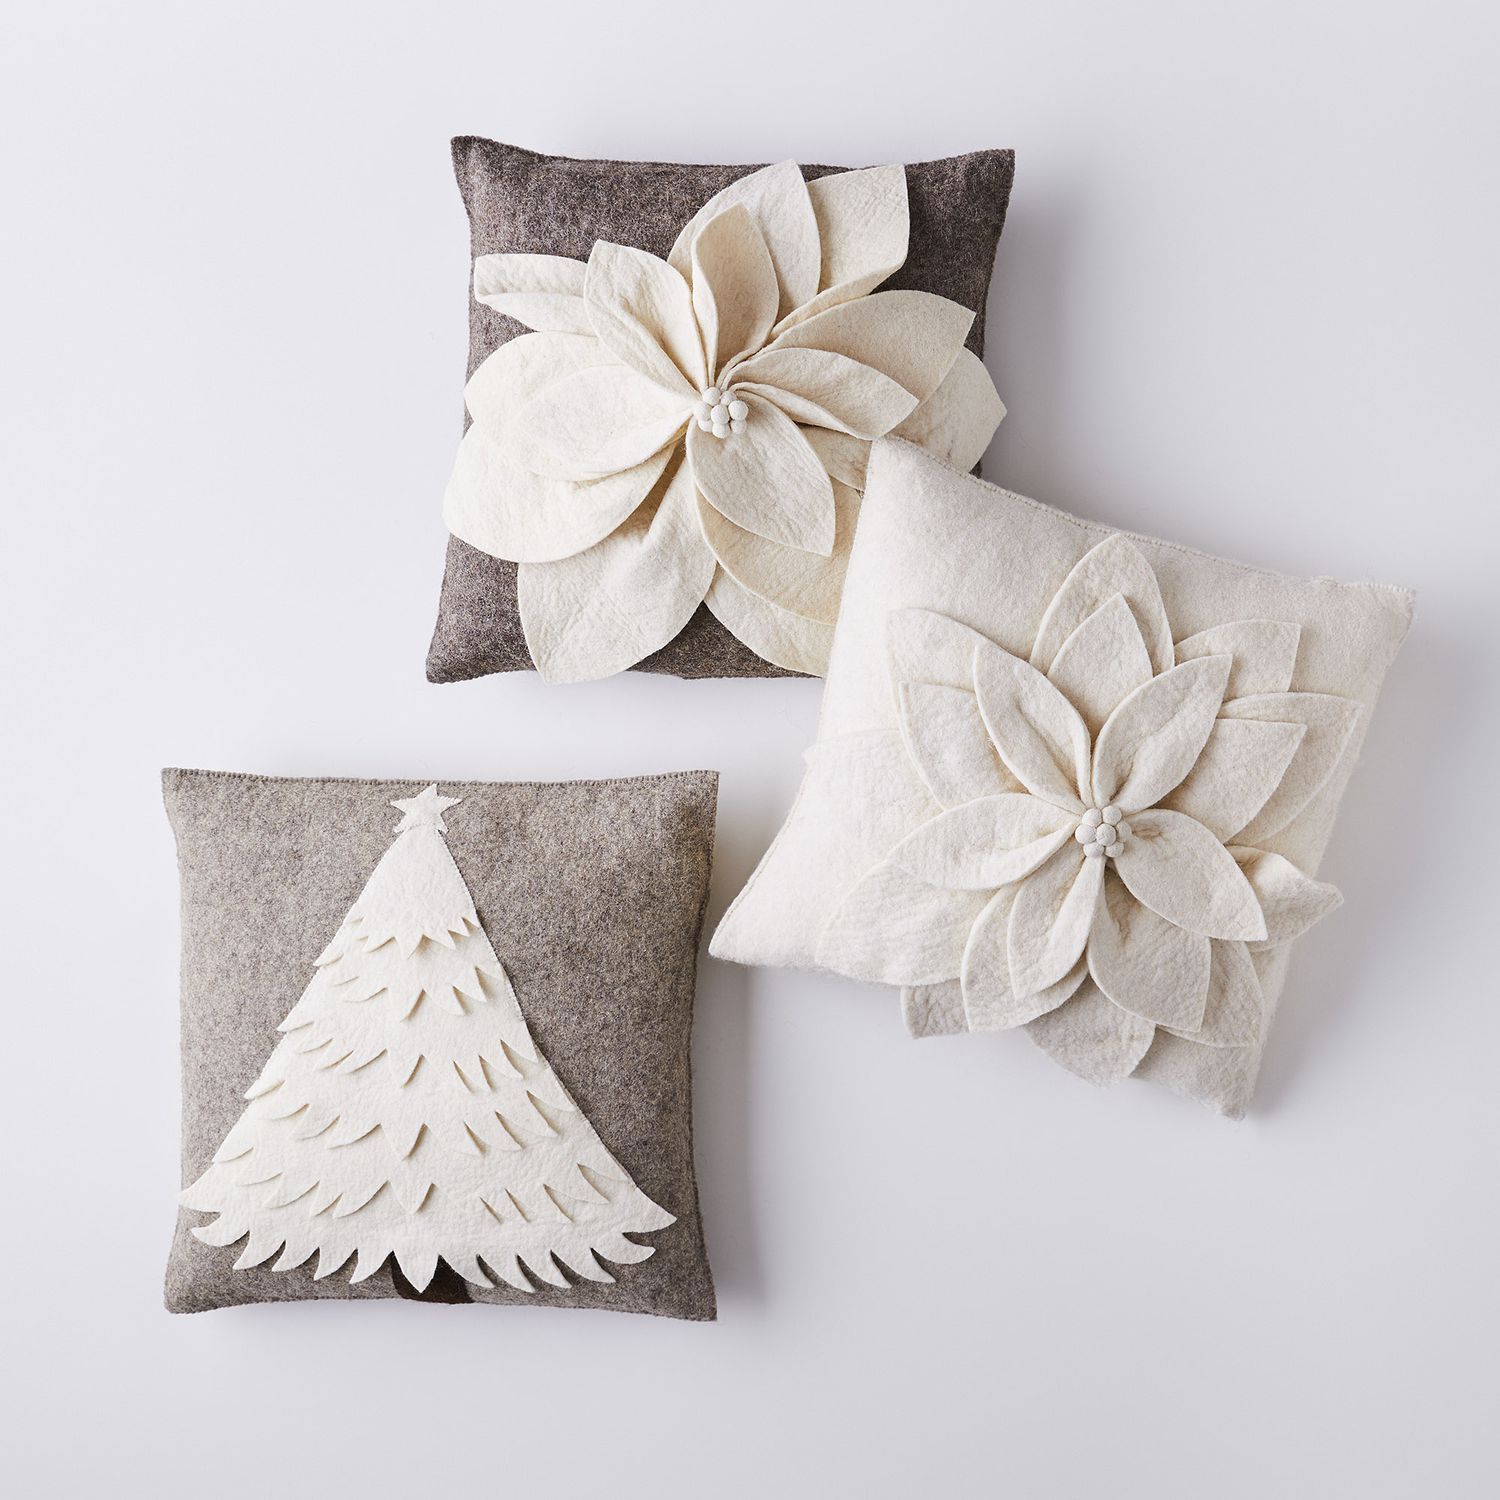 Handmade Holiday Felt Pillows | Food52